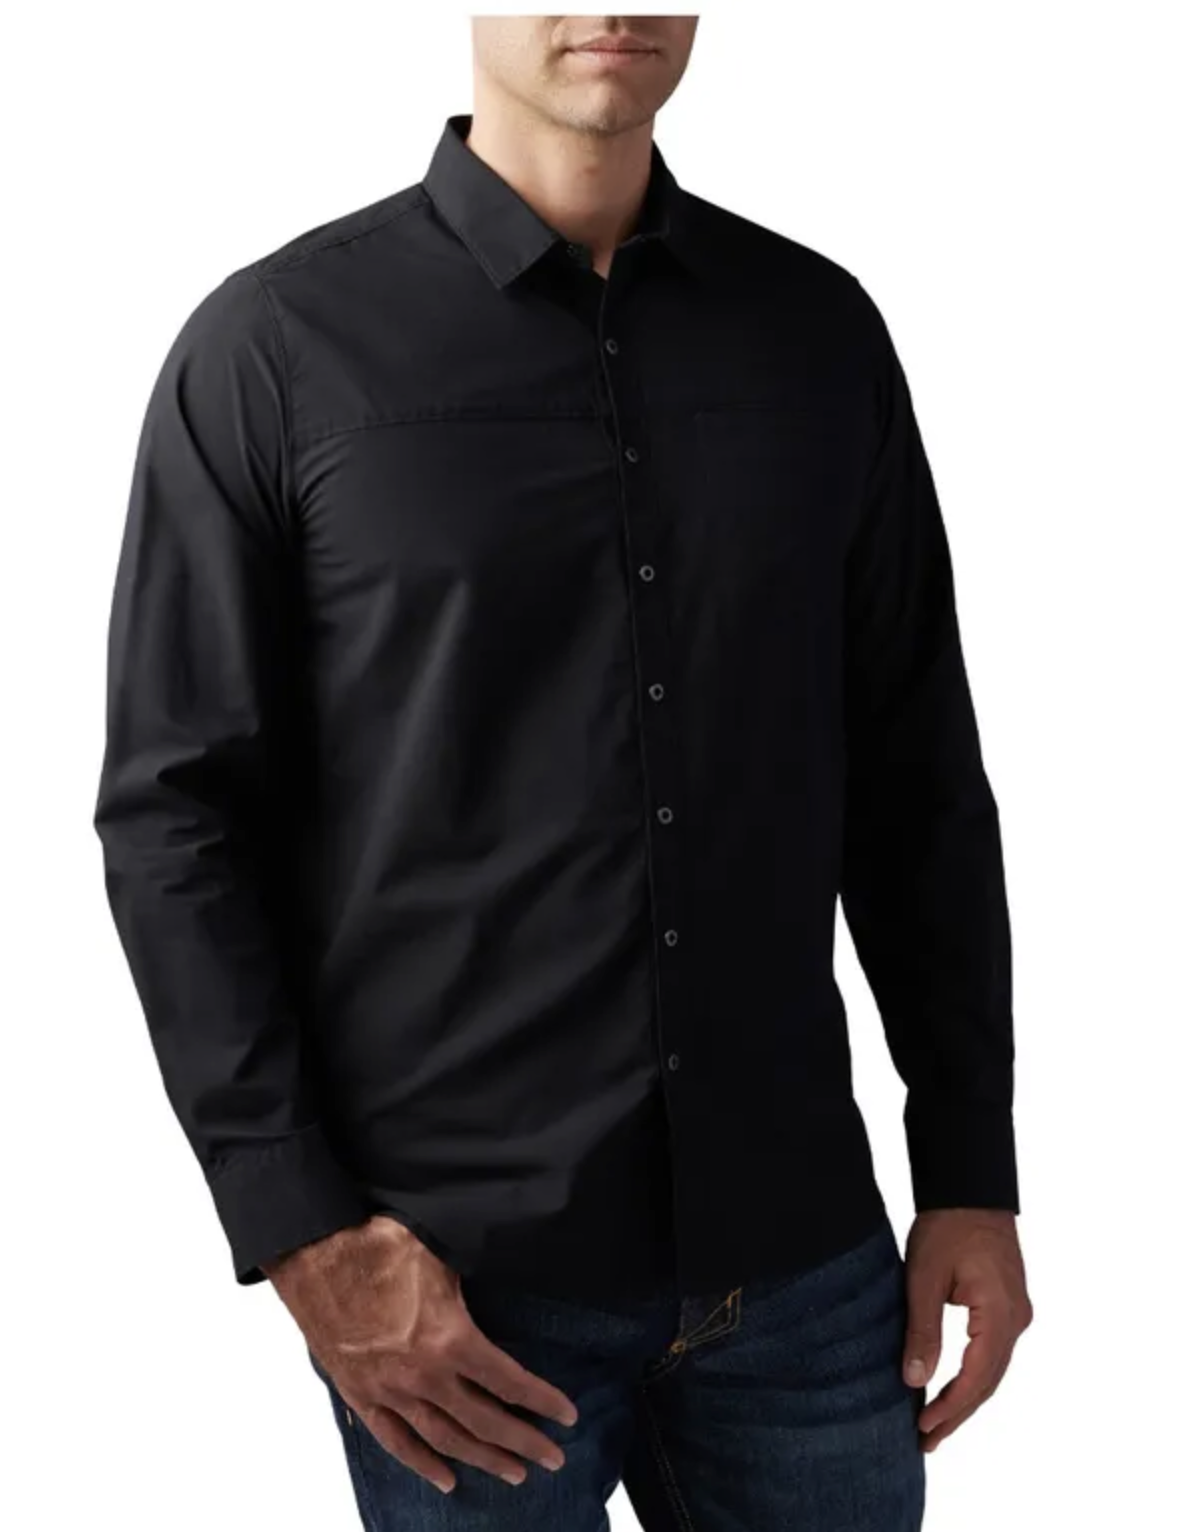 5.11 - Igor Solid Long Sleeve Shirt - Black (019)